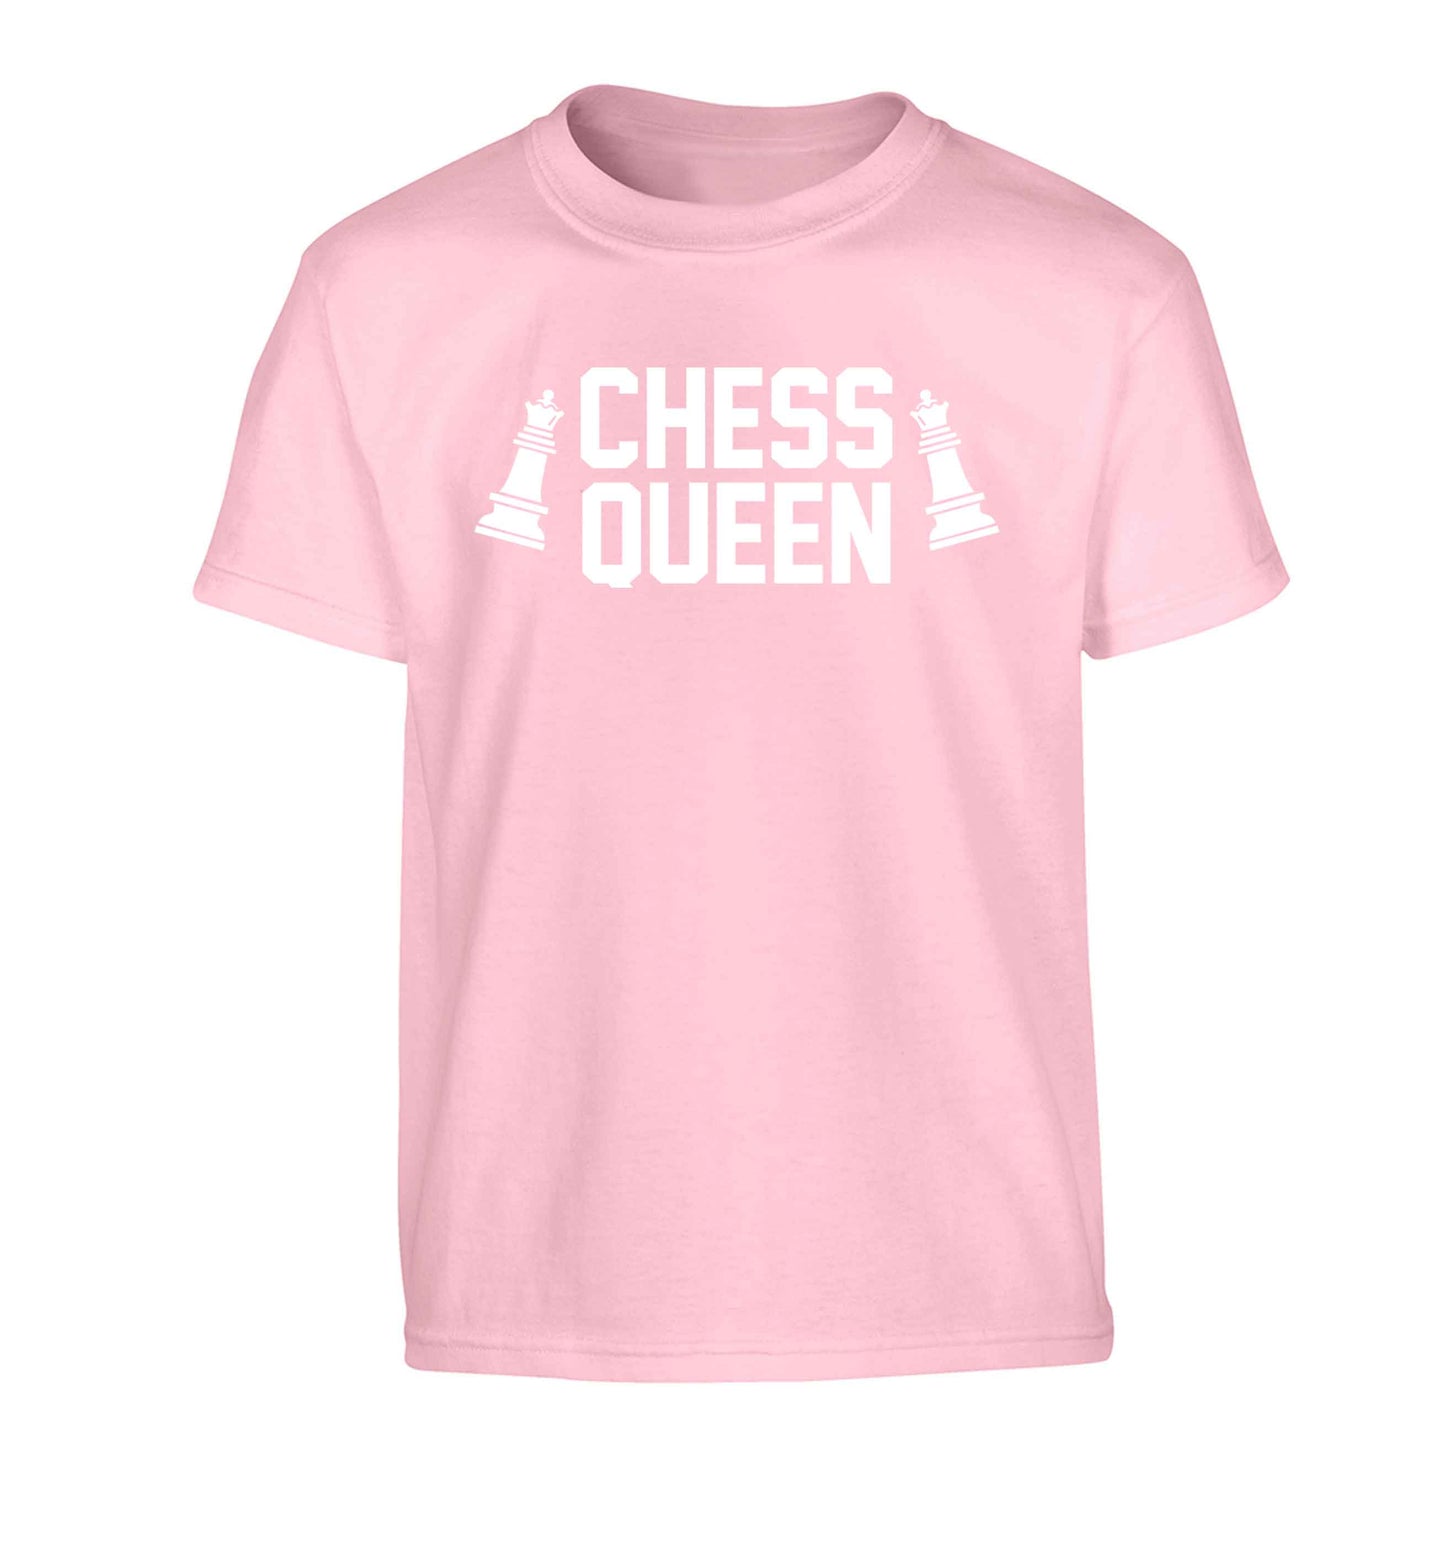 Chess queen Children's light pink Tshirt 12-13 Years